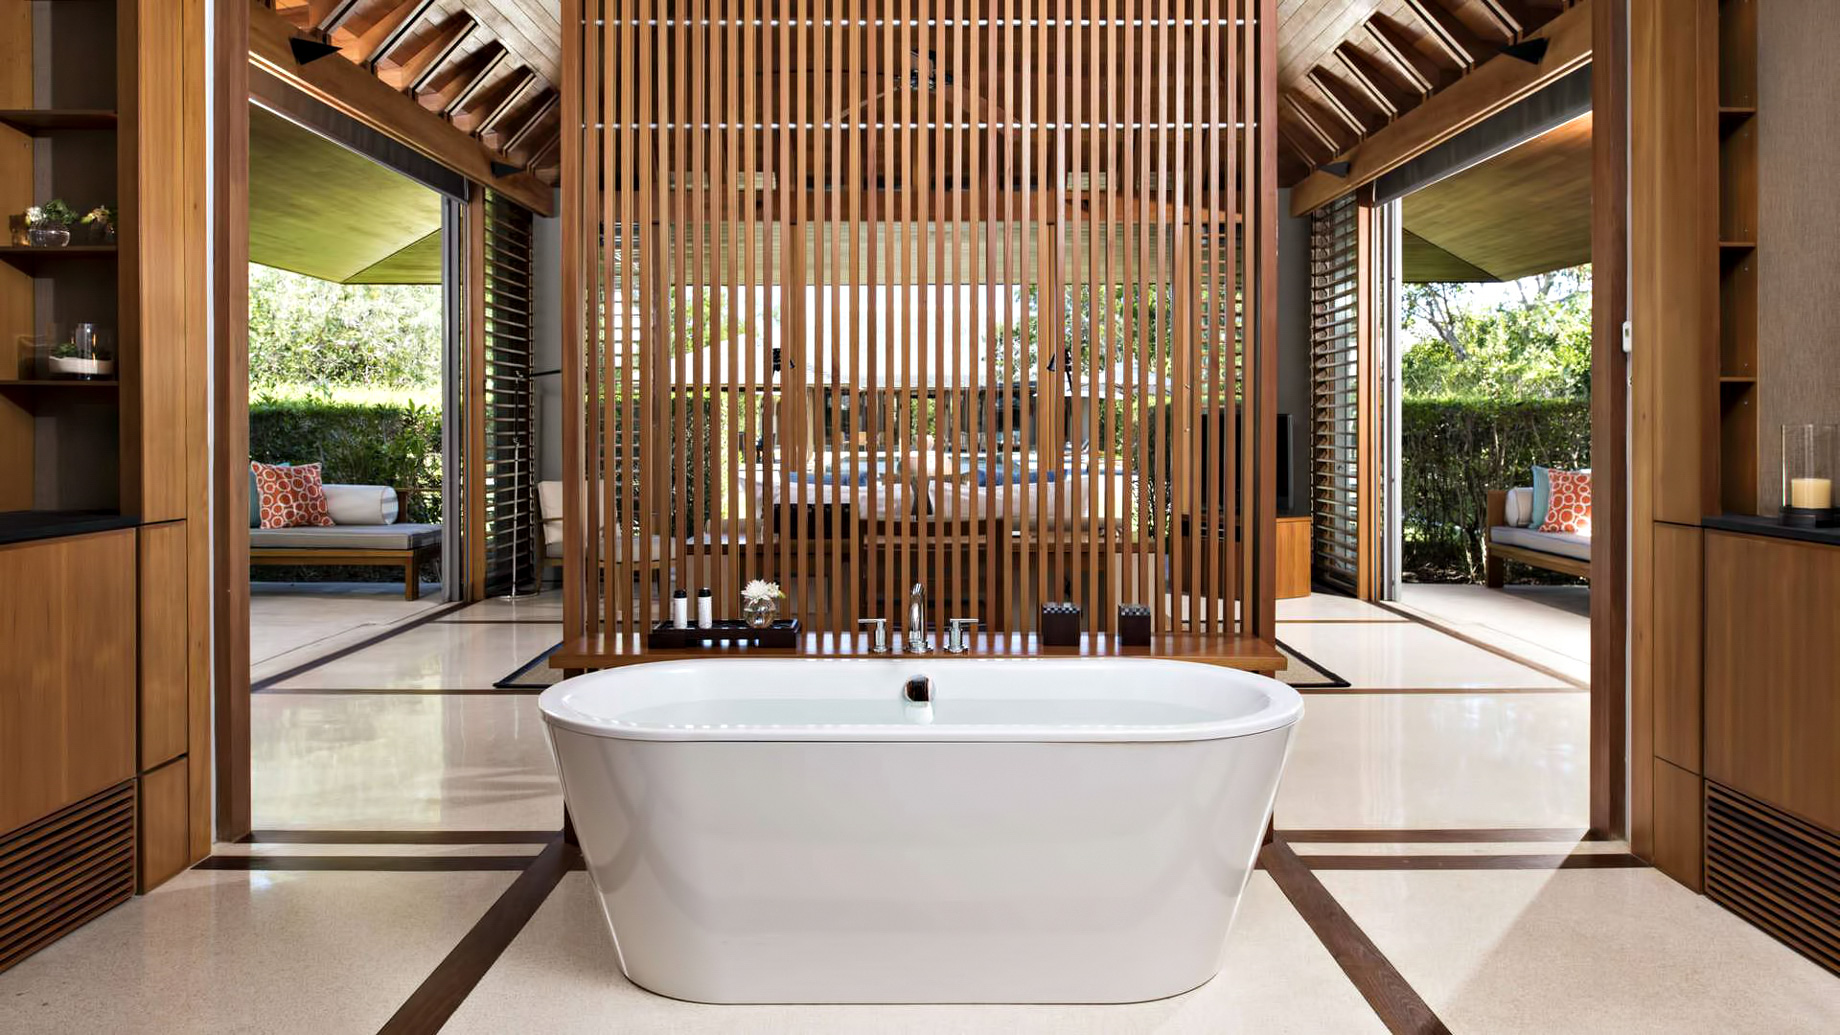 Amanyara Resort – Providenciales, Turks and Caicos Islands – 6 Bedroom Amanyara Villa Bathroom Tub